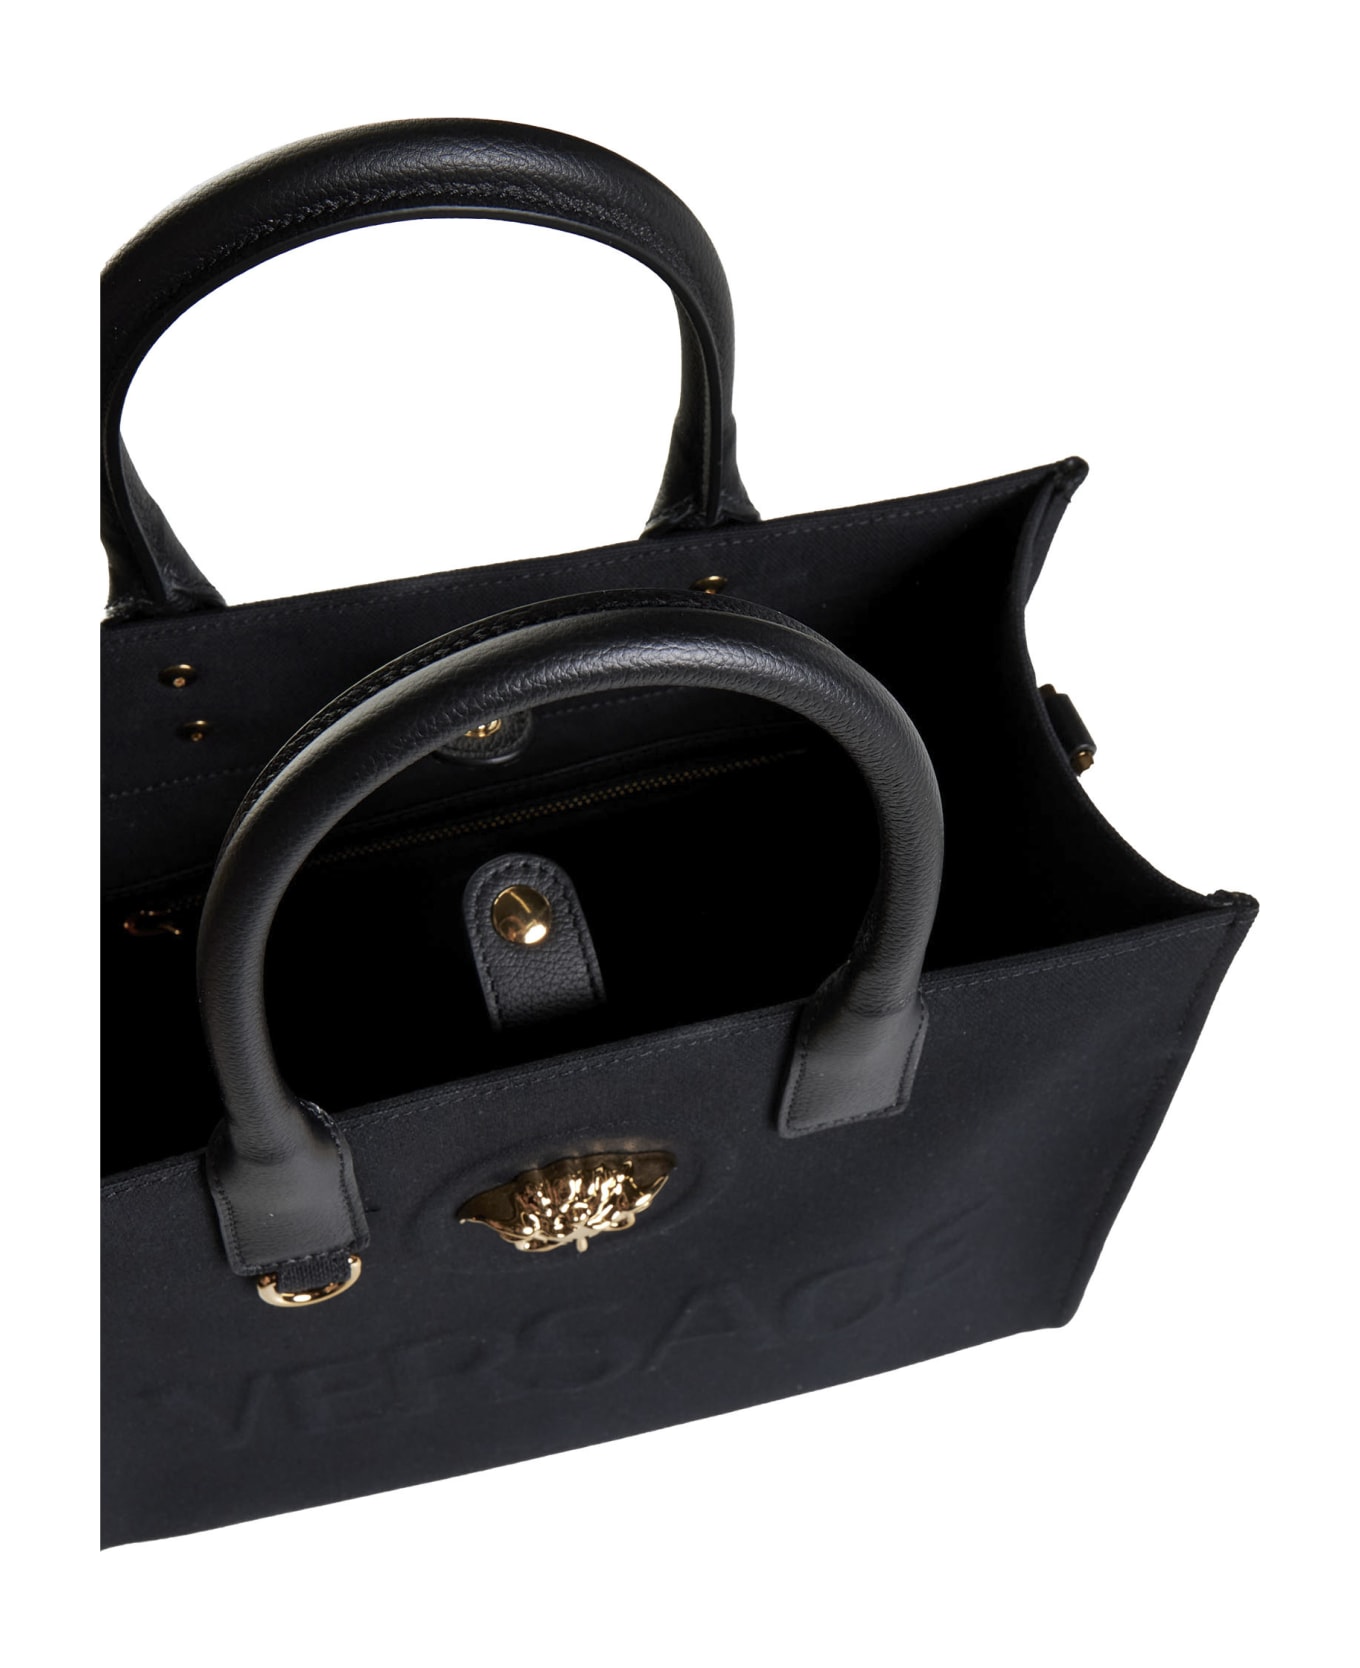 Versace La Medusa Tote Bag - Nero+oro Versace